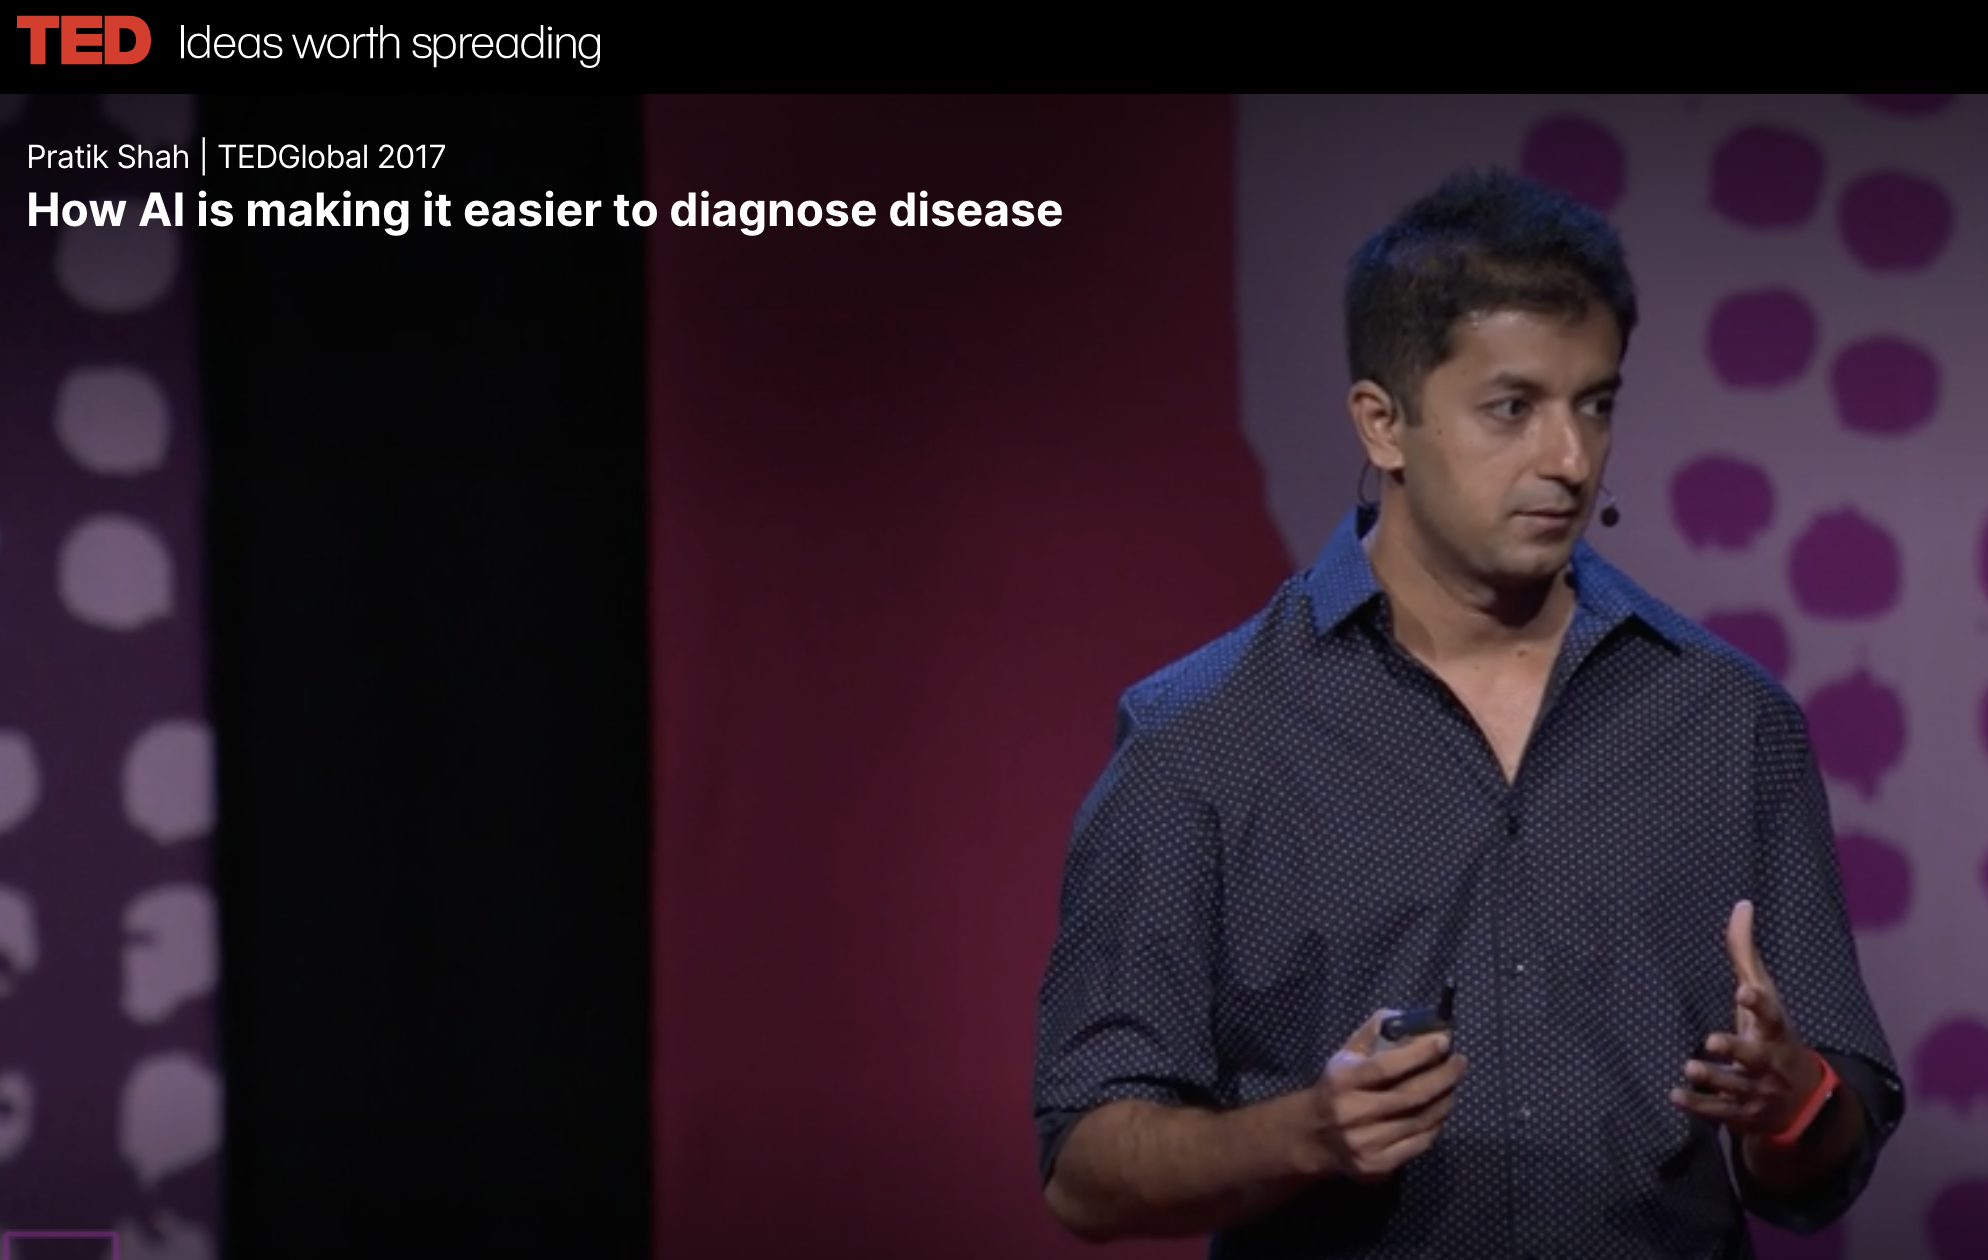 TED 医療英会話　AIが病気の診断を簡単にする方法（04:59） プラティック・シャー（Pratik Shah）